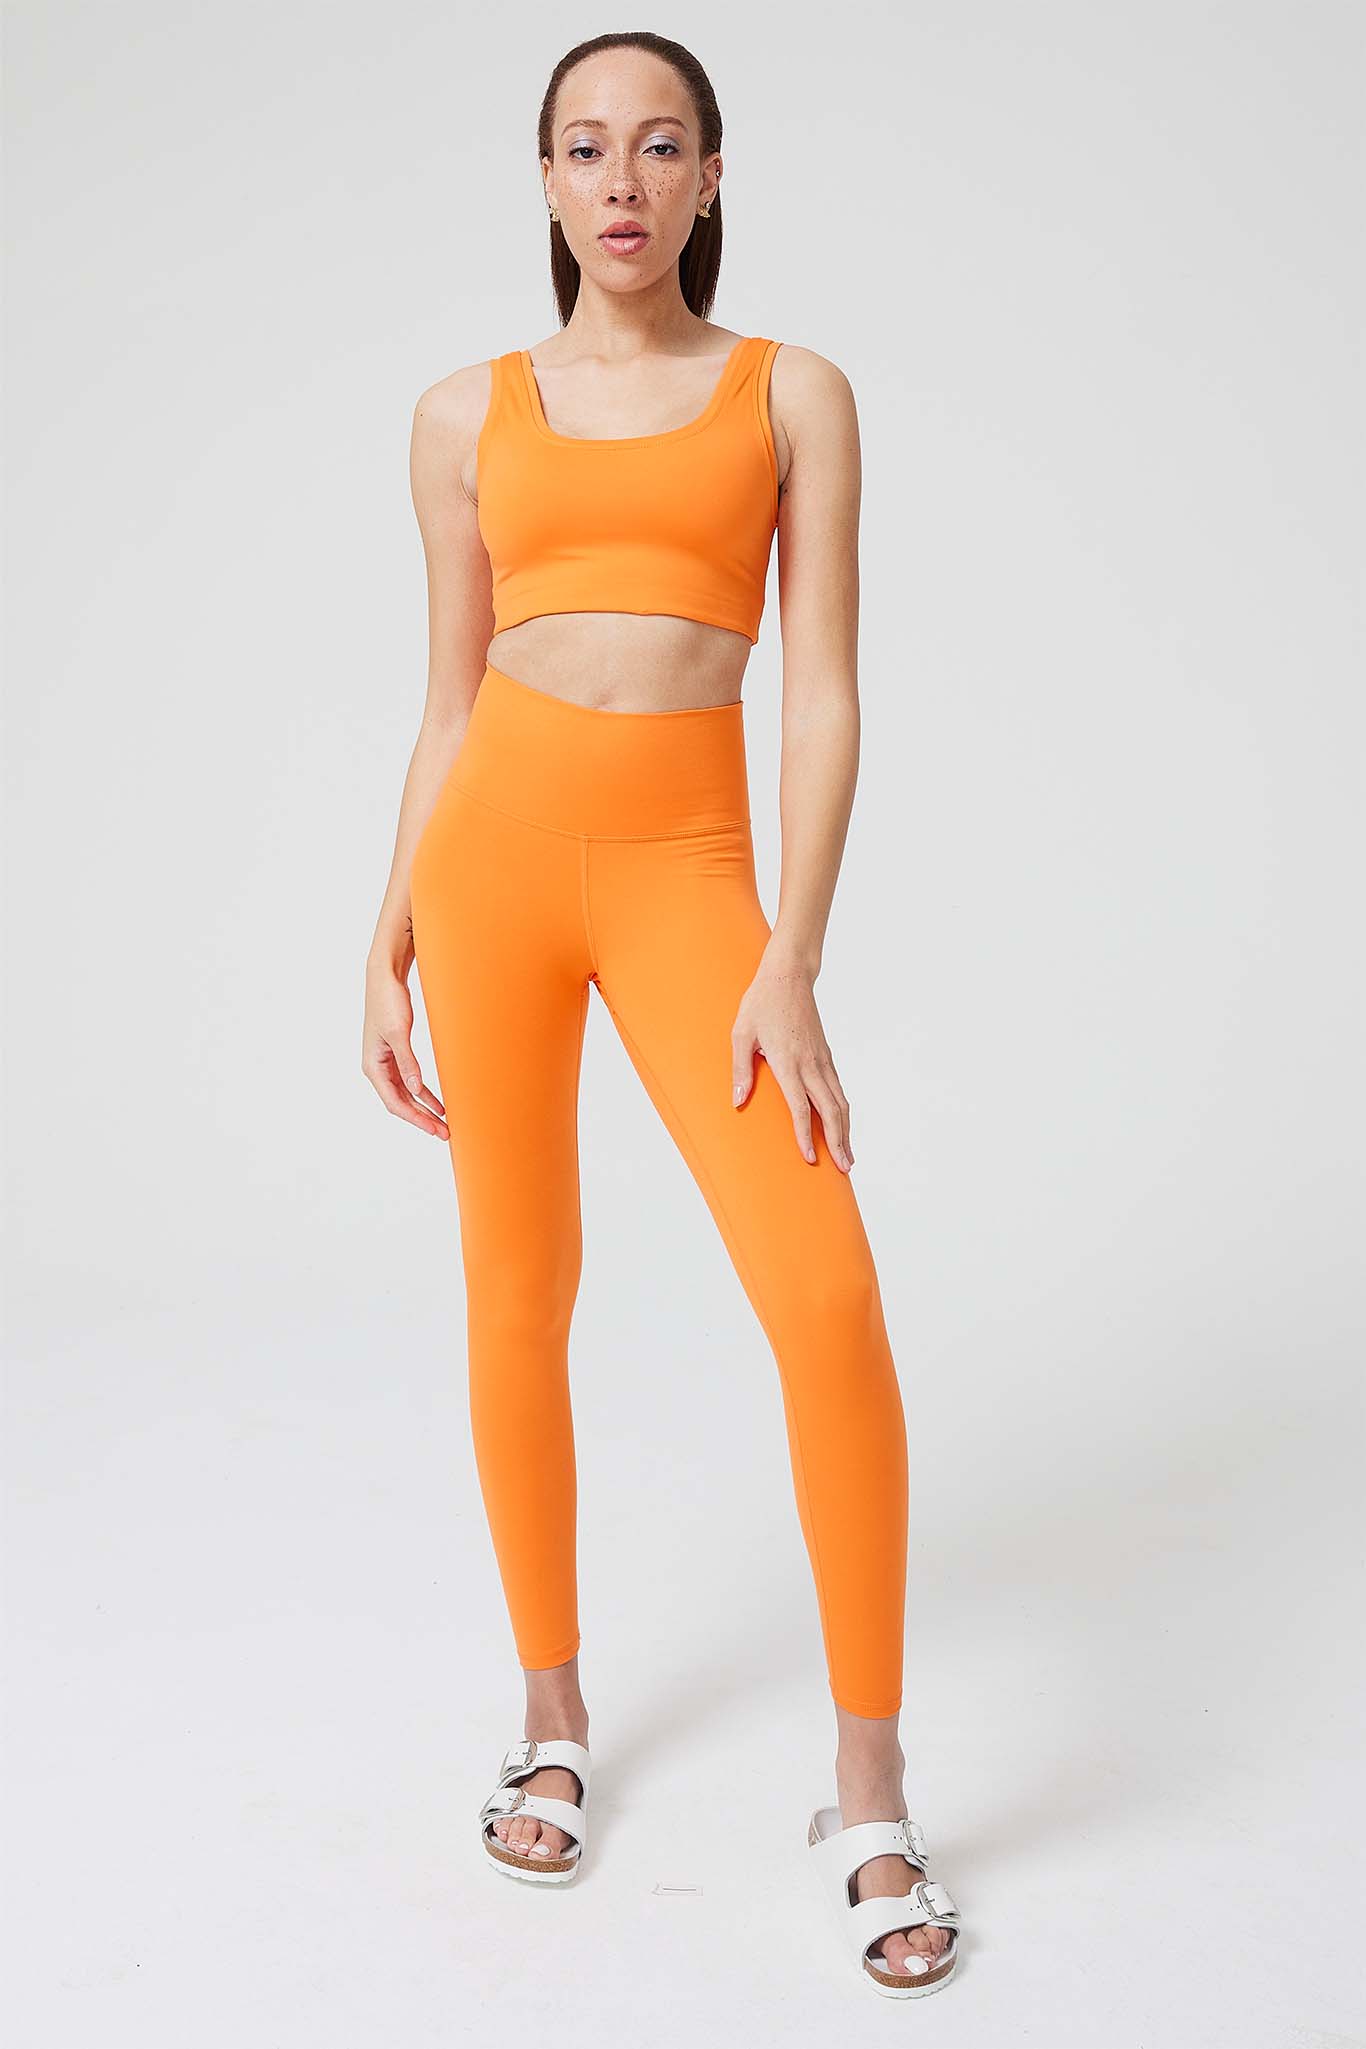 Buy The Giving Movement women sportswear fit solid training leggings  tangerine orange Online